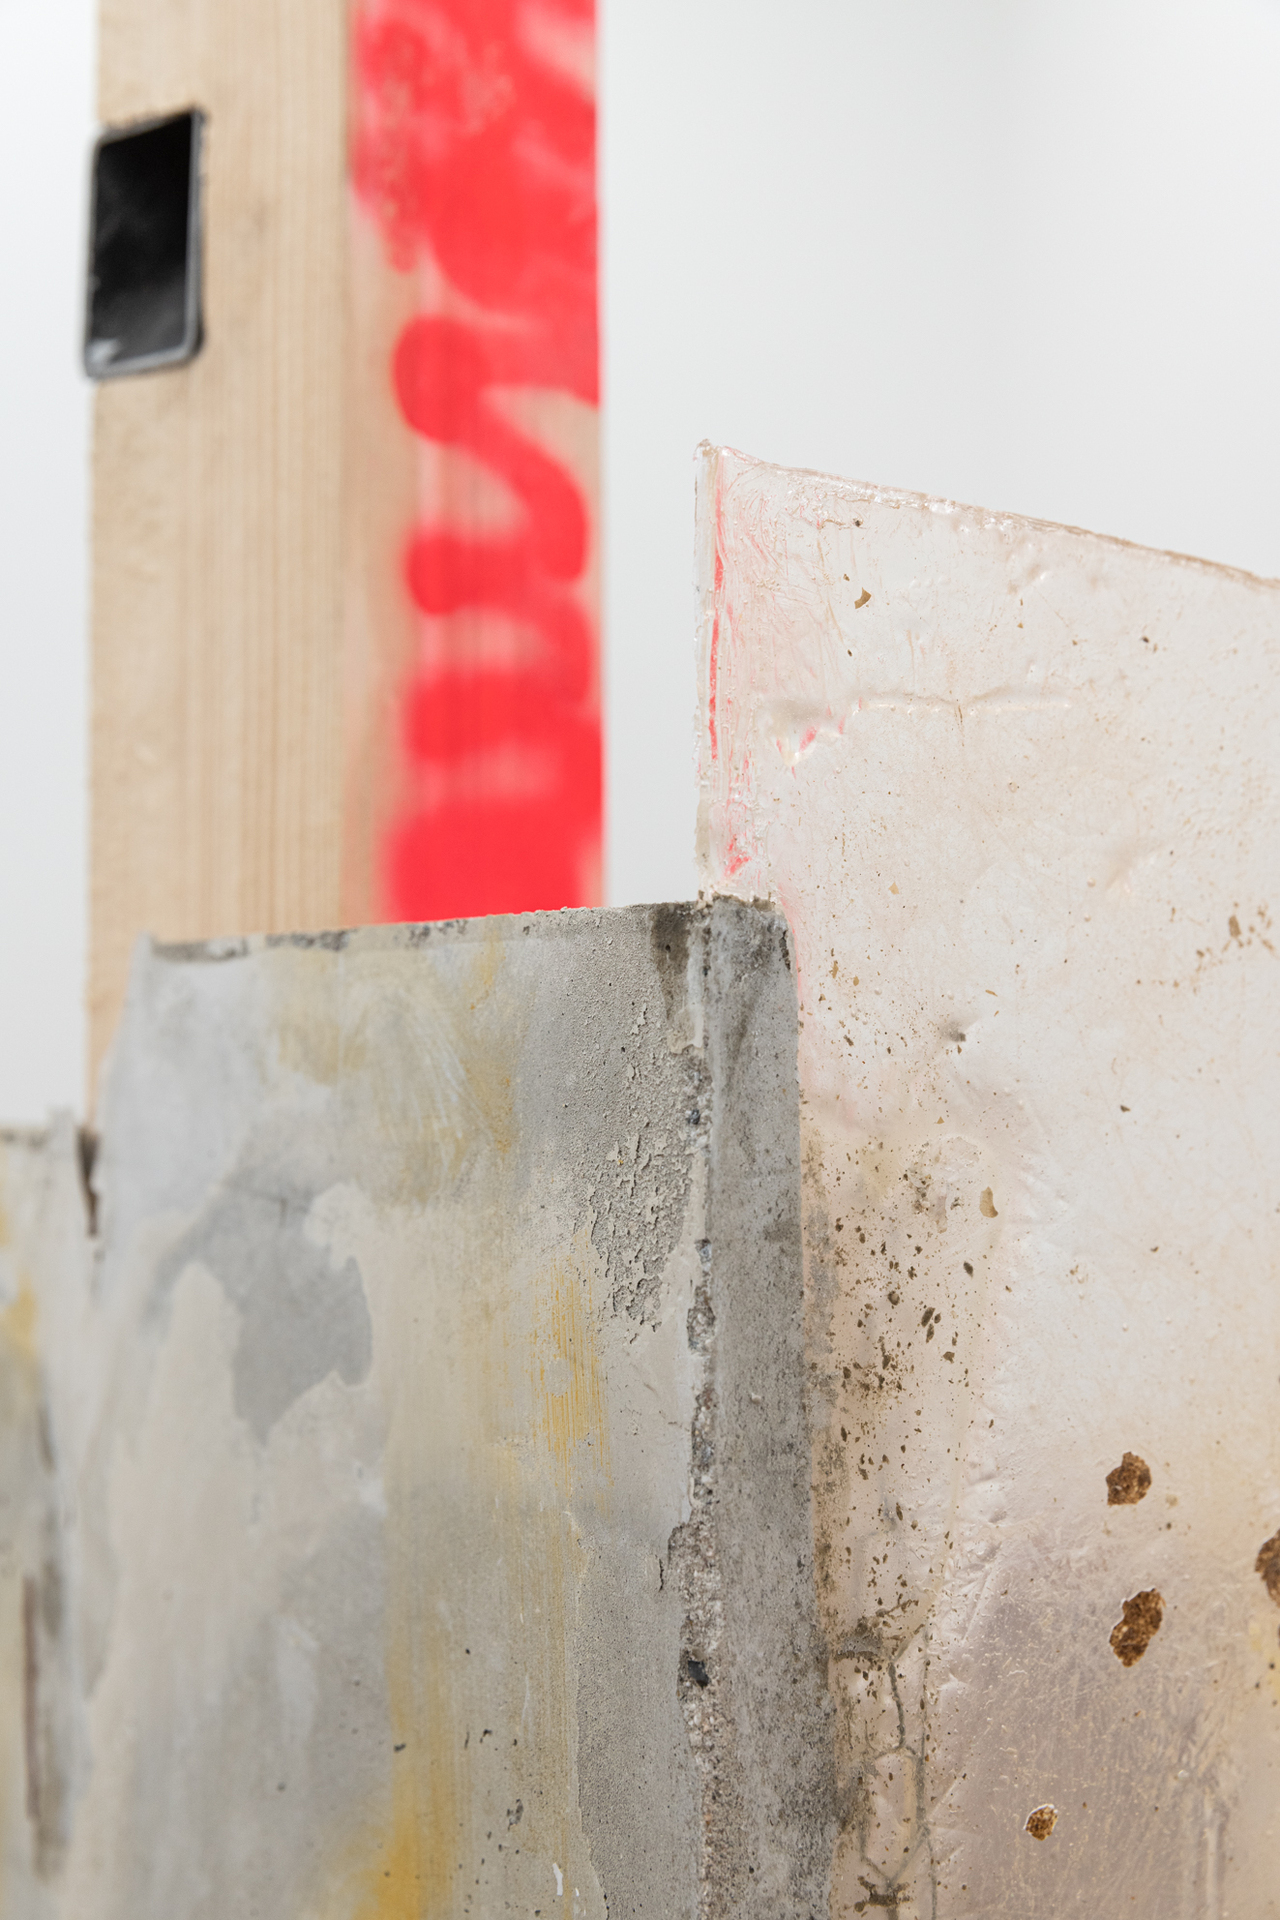 Patrick Ostrowsky, "blubbern", 2021, polyurethane foam, wood, concrete, spray paint, polyurethane rubber, foamed plastic, wire, strapping tape, 58 x 30,5 x 2,5 cm